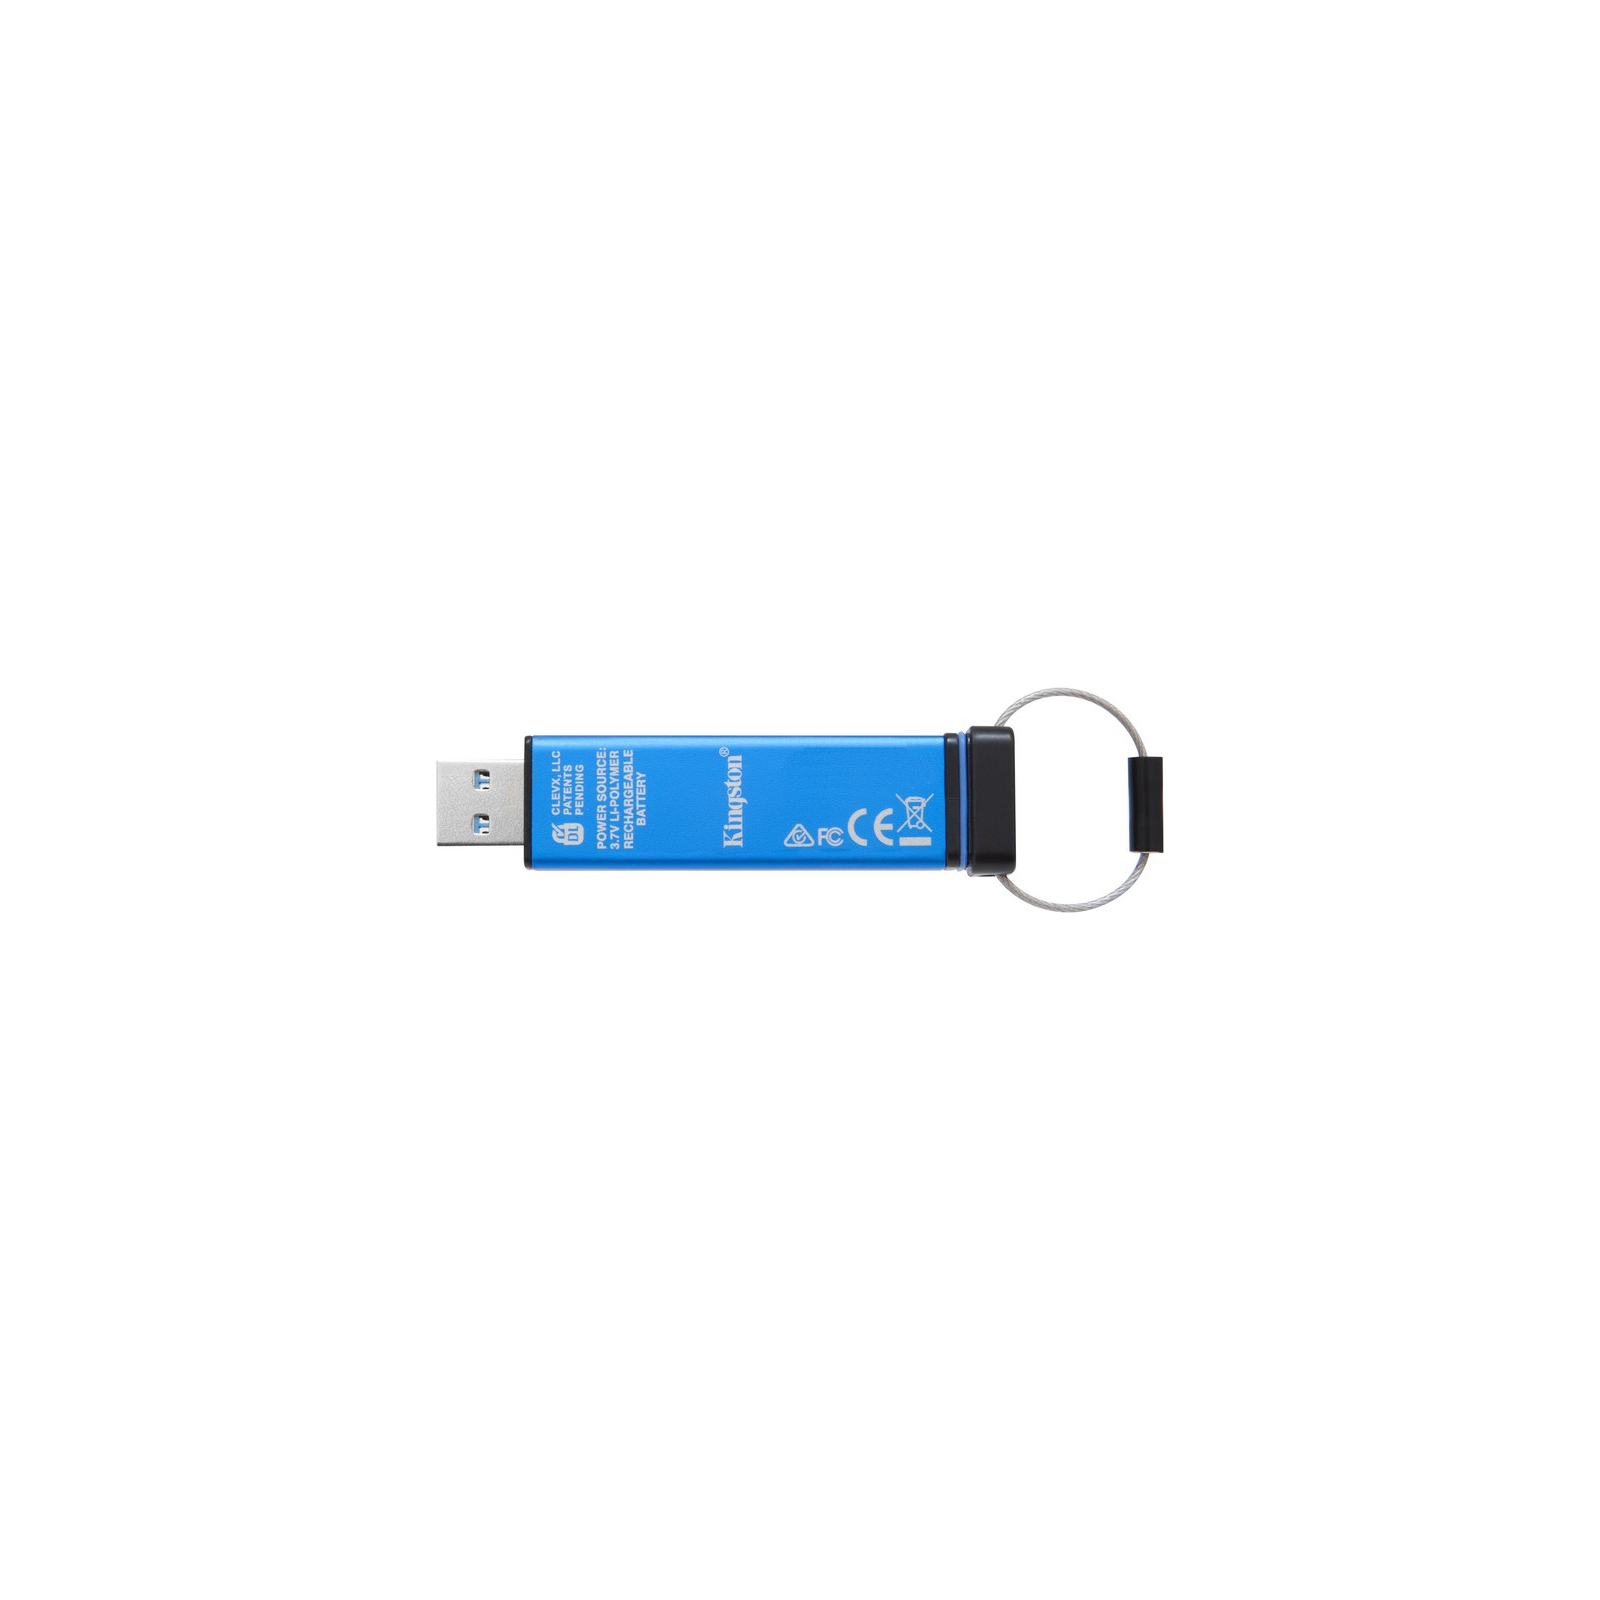 USB флеш накопитель Kingston 32GB DT 2000 Metal Security USB 3.0 (DT2000/32GB) изображение 3